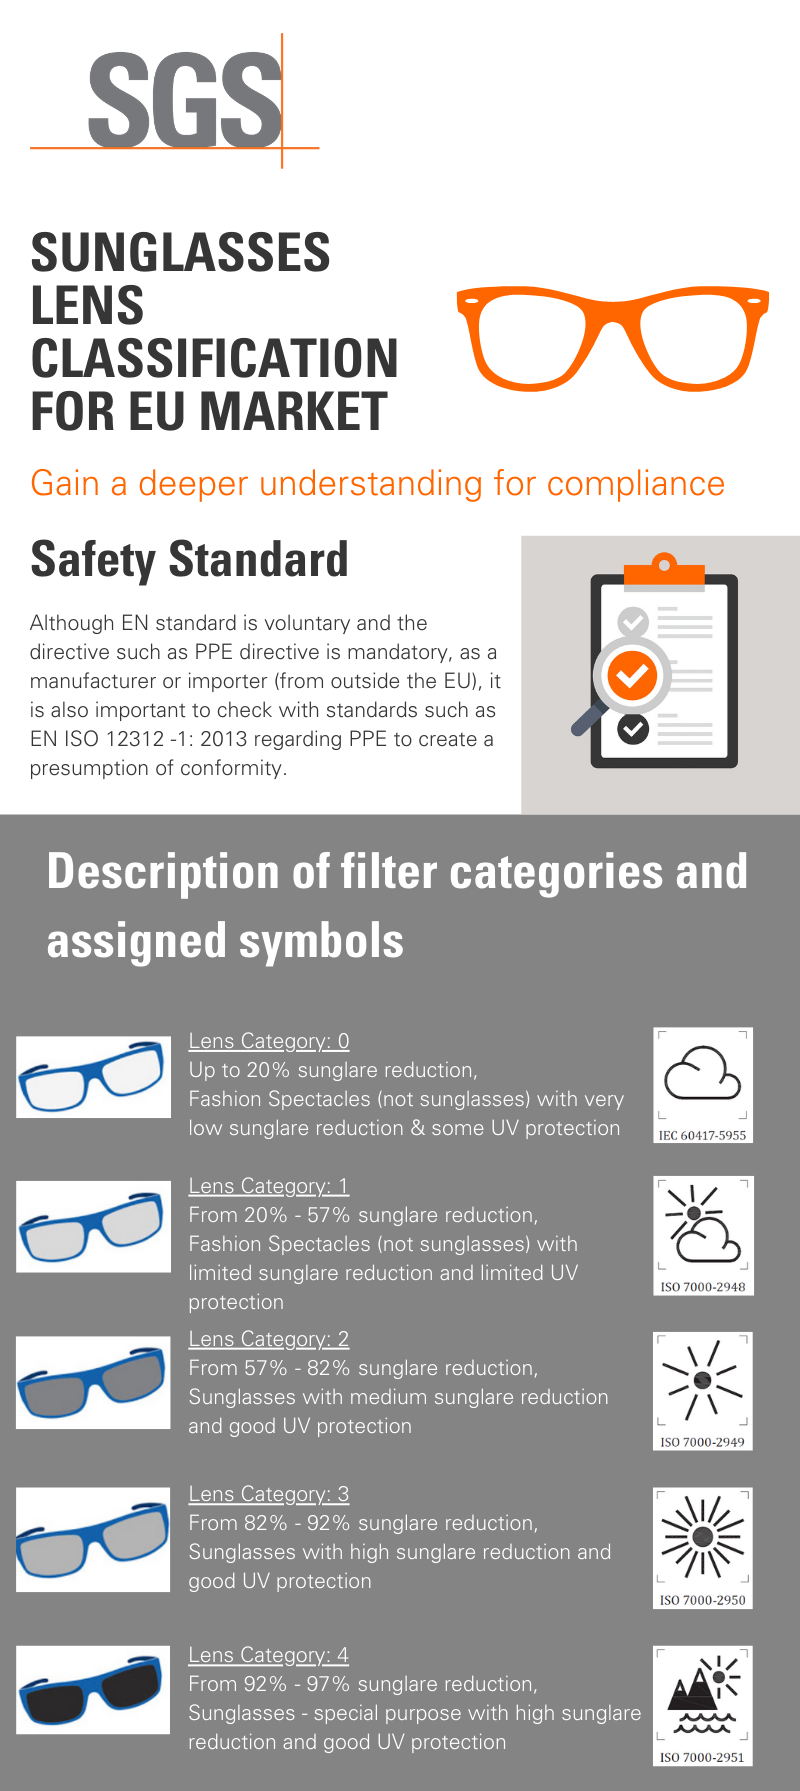 SGS-sunglasses-lens-classification-in-eu-market